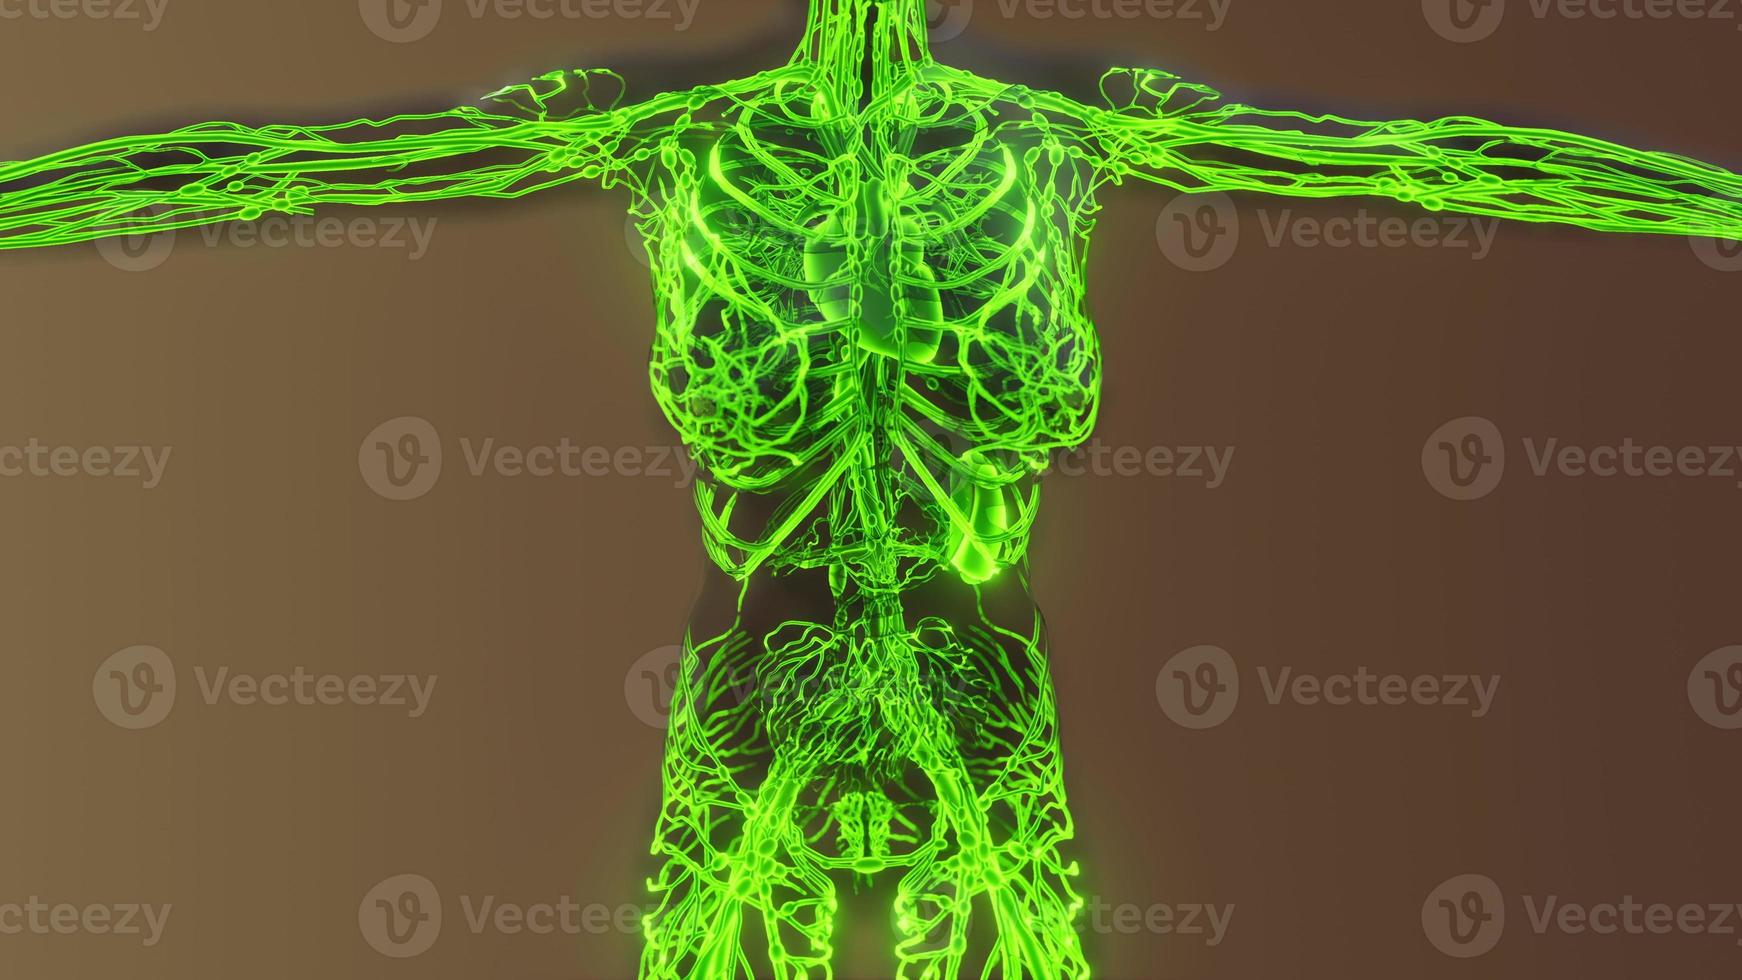 análise da anatomia dos vasos sanguíneos humanos foto